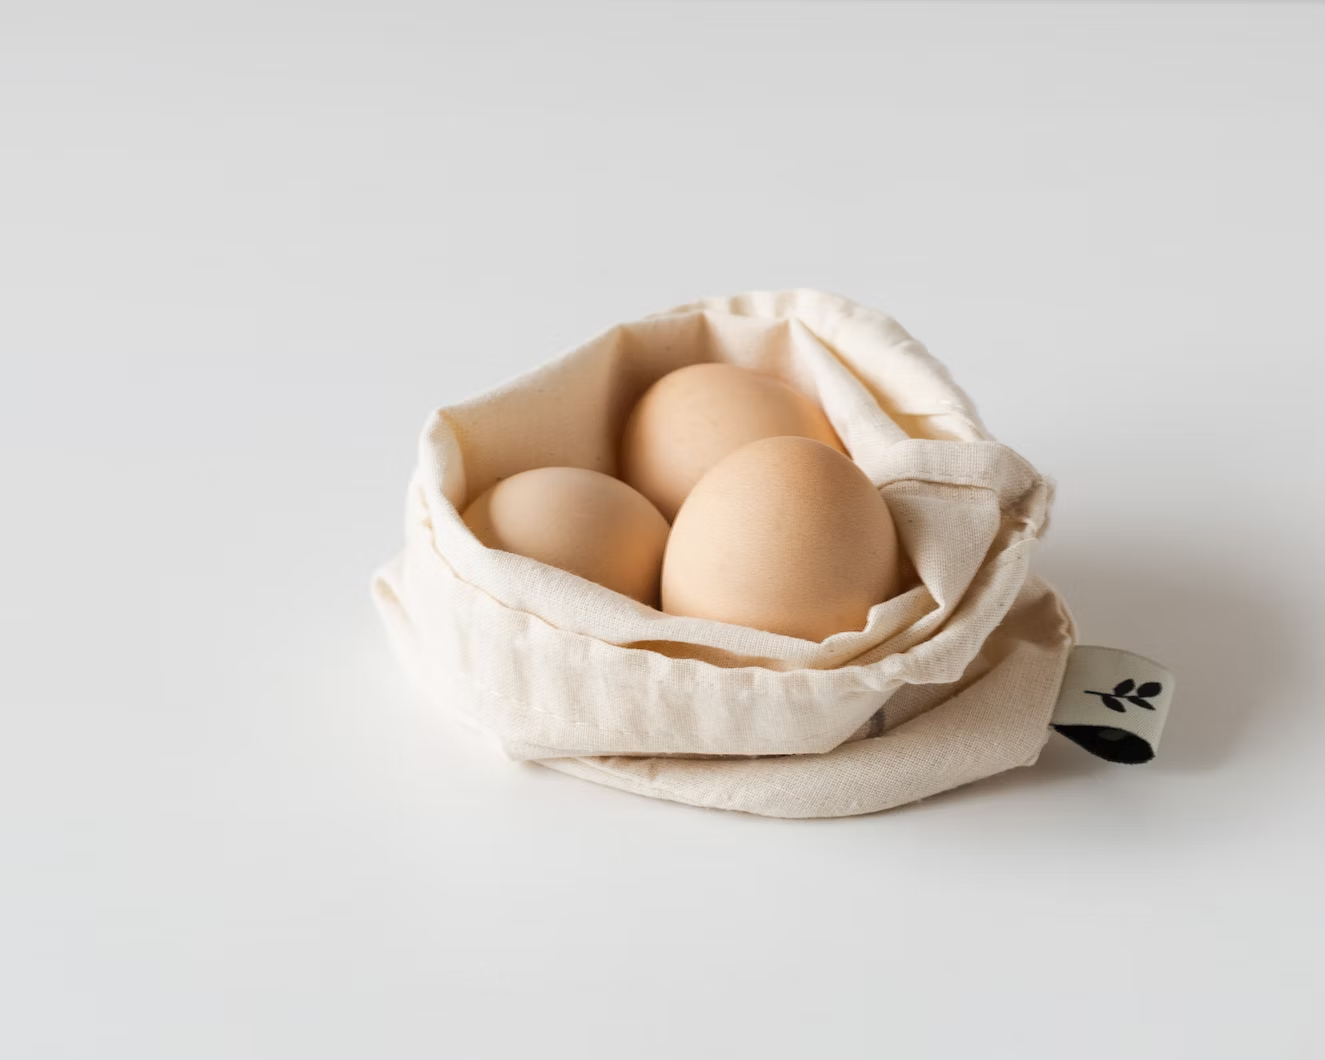 Understanding Egg Freezing and IVF